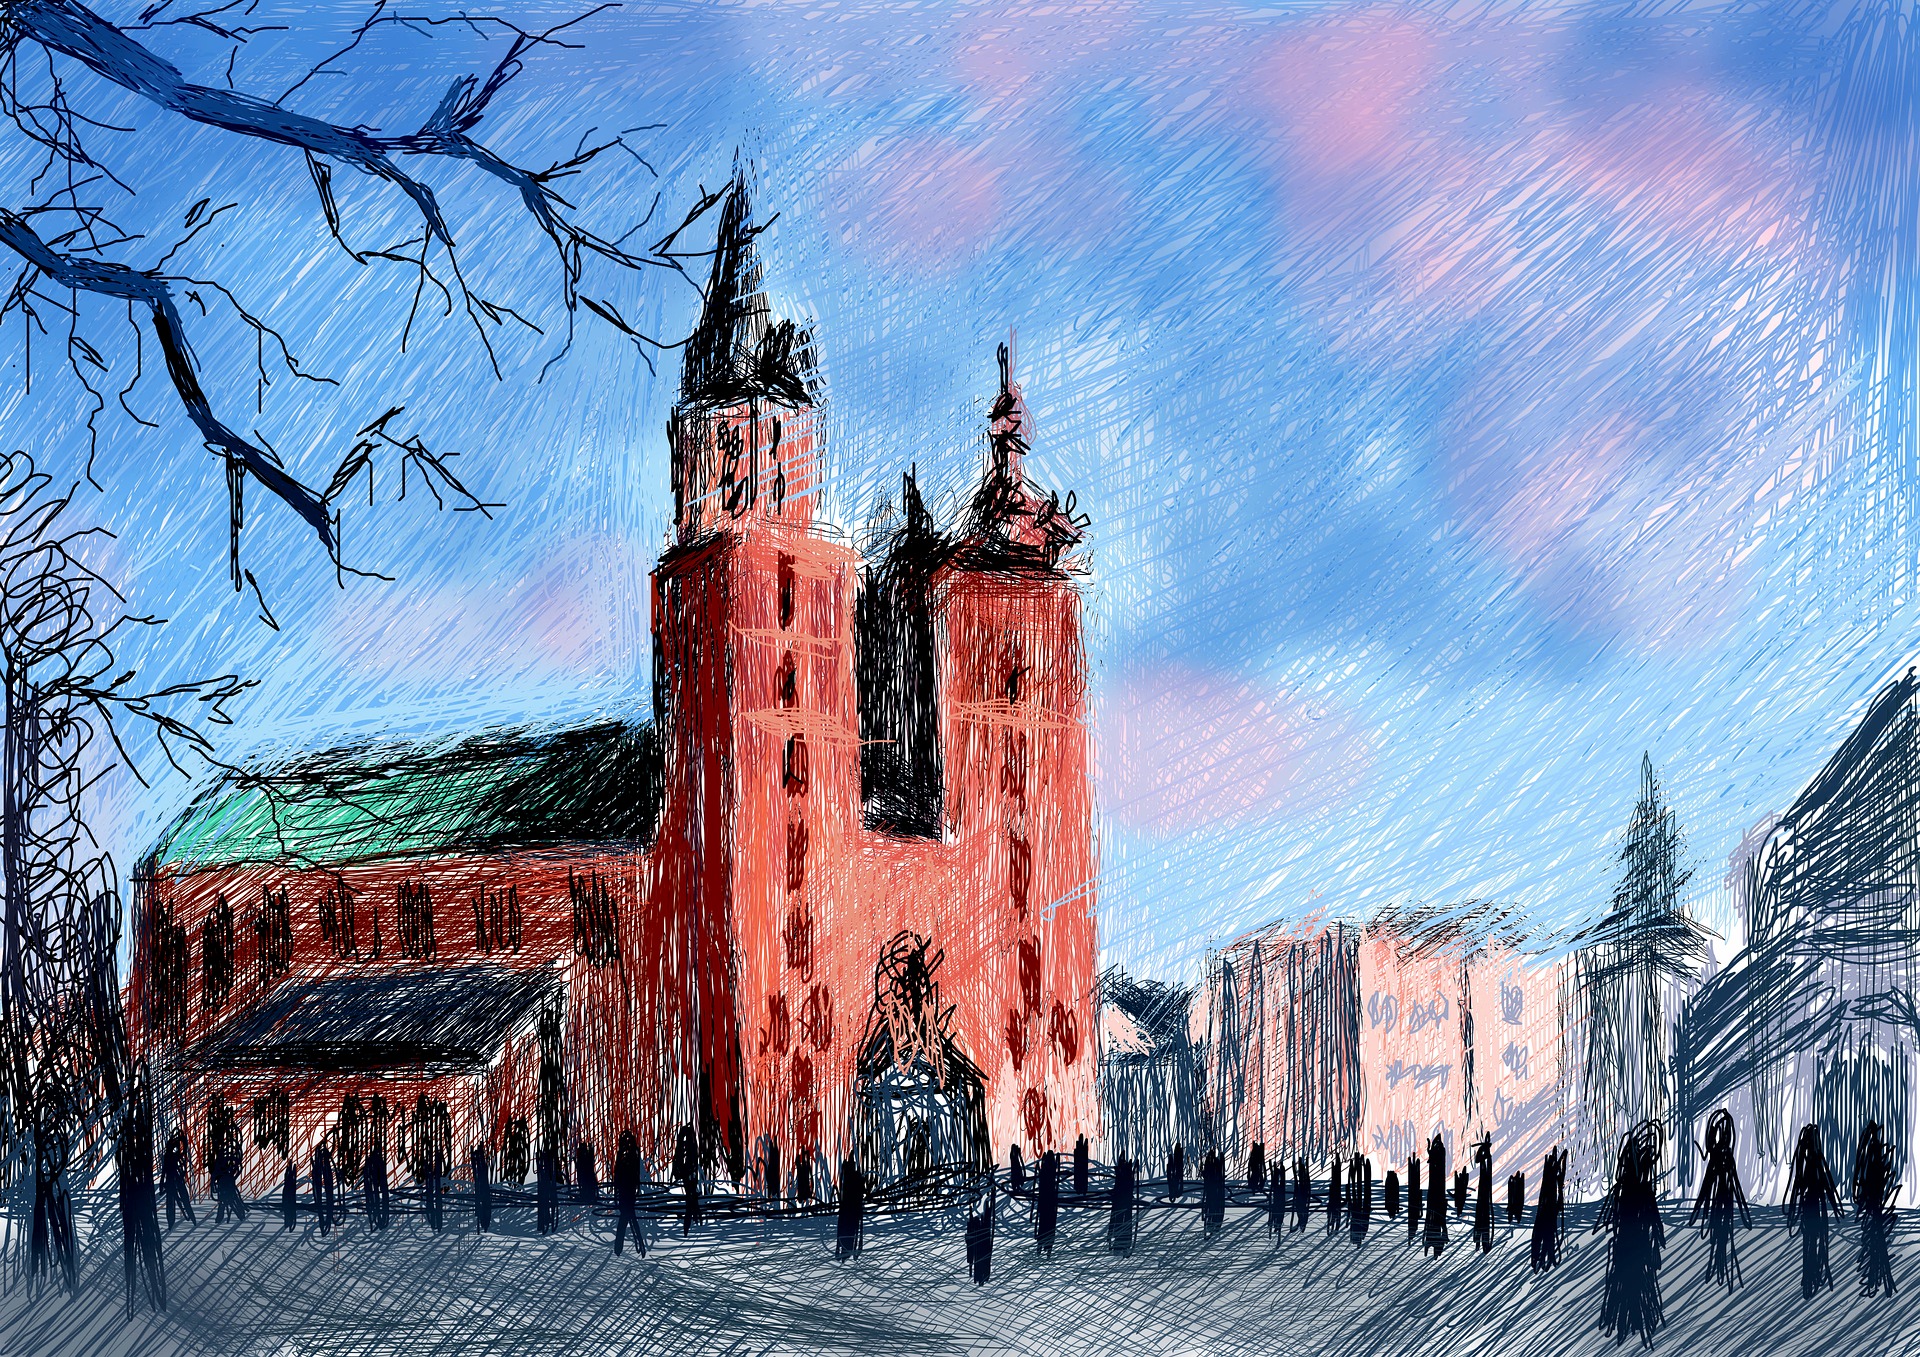 Warsaw Market, by Kitztym on Pixabay